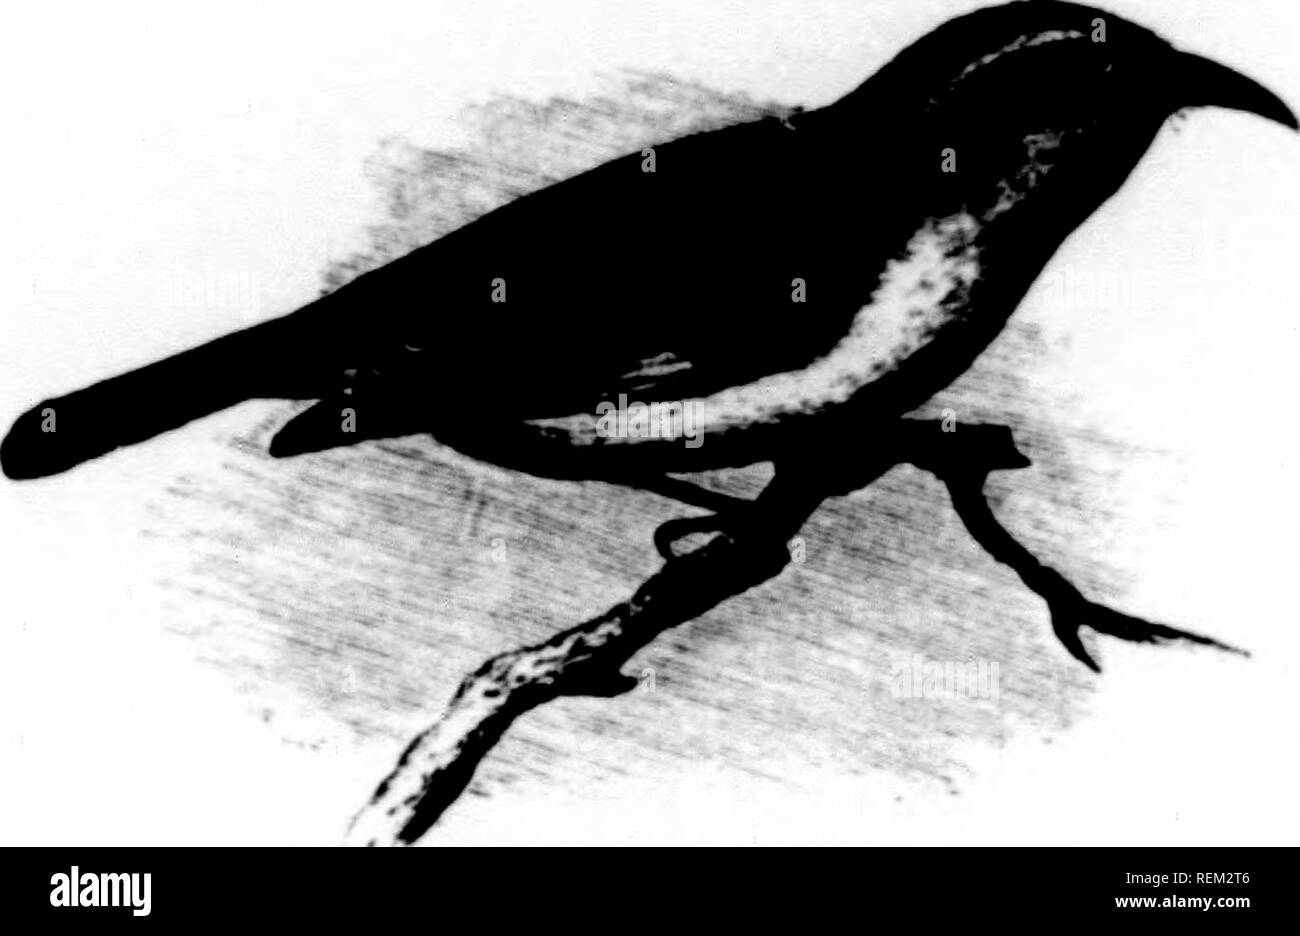 https://c8.alamy.com/comp/REM2T6/a-history-of-north-american-birds-microform-land-birds-birds-north-america-ornithology-north-america-oiseaux-amrique-du-nord-ornithologie-amrique-du-nord-42g-noirrn-amkkican-imiids-cirtliioln-flavtola-well-11111-nil-tlu-niitr-rcilucrd-t-i-narrow-imhiic-r-ruhnti-from-ltuiiul-iitiir-tlie-fjistiin-cuast-of-nlualaii-cxliiltits-tlu-atli-at-liasc-of-iiills-vliilc-tliis-disappears-in-tlic-species-of-tlie-lesser-antilles-and-eastern-sutli-america-nr-is-only-laintly-liacealde-aiiaiii-in-the-sgtecies-otquot-the-lesser-antilles-wi-REM2T6.jpg